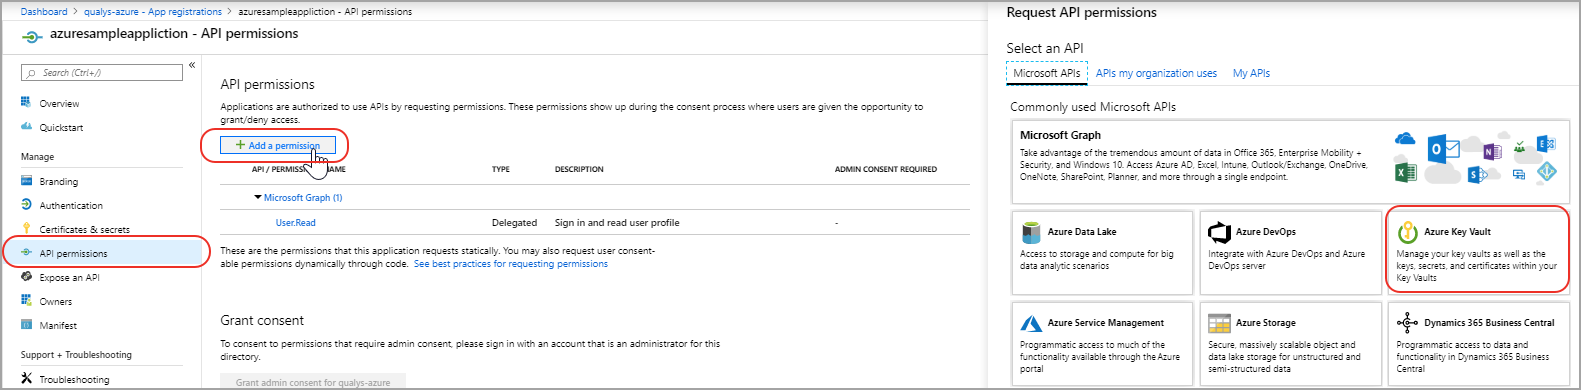 Azure Key Vault option in API permissions.